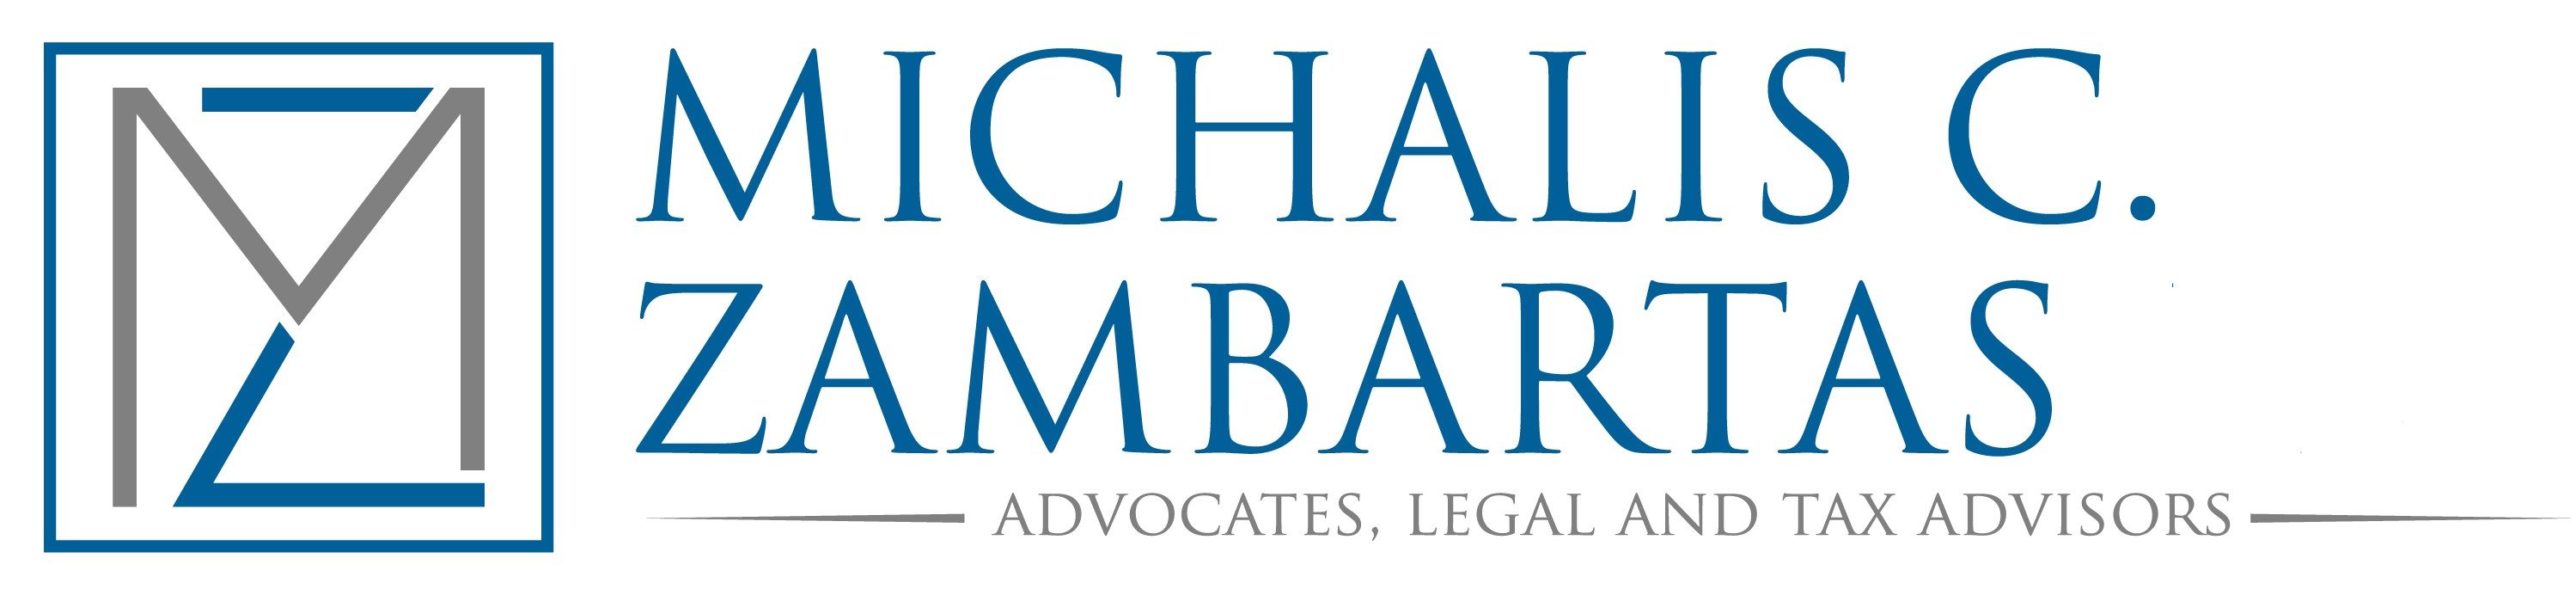 MICHALIS C. ZAMBARTAS, Advocates, Legal & Tax Advisors